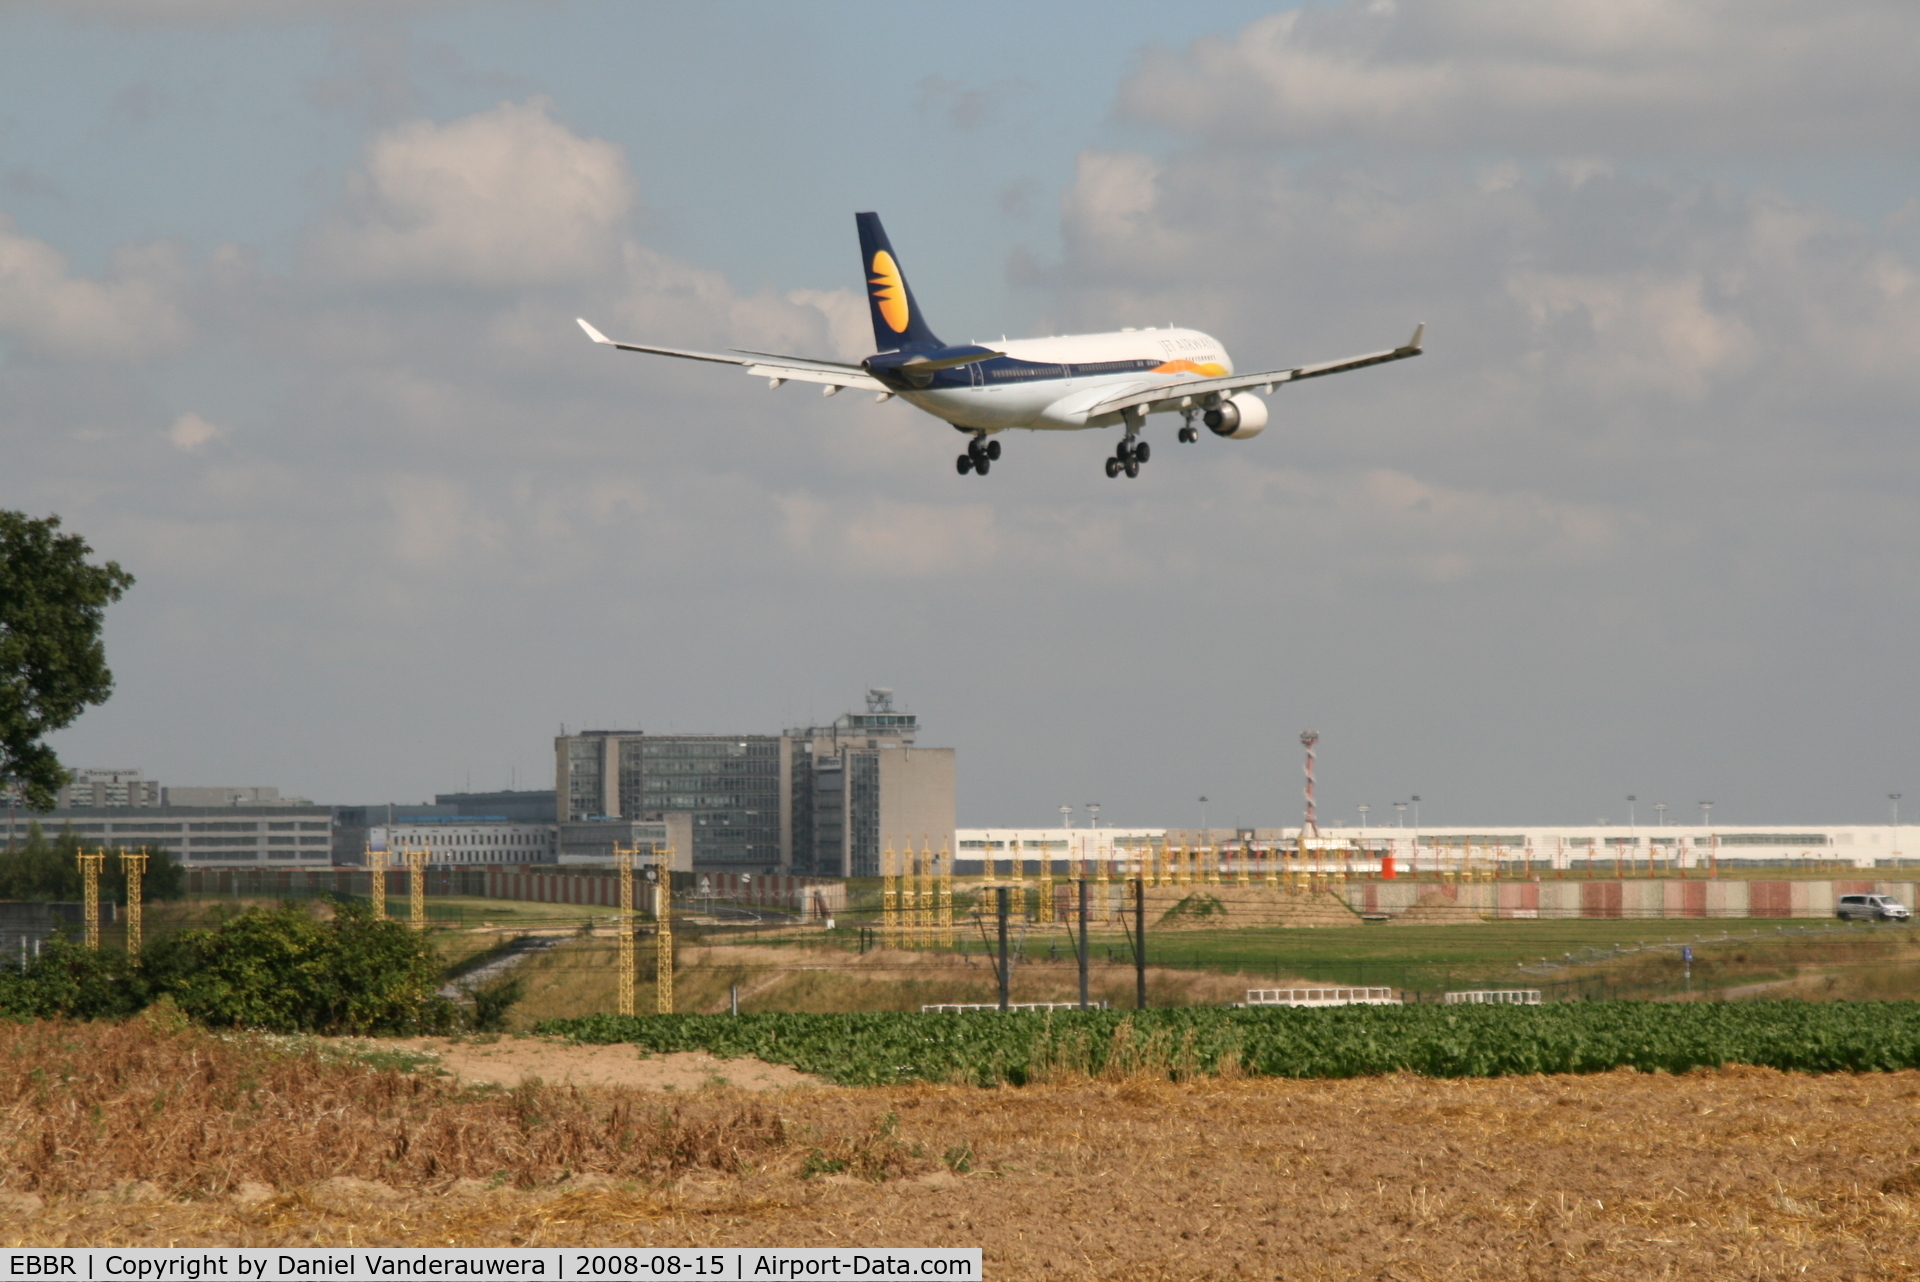 Brussels Airport, Brussels / Zaventem   Belgium (EBBR) - flight 9W225 (A330-203 - VT-JWF) is descending to rwy 02